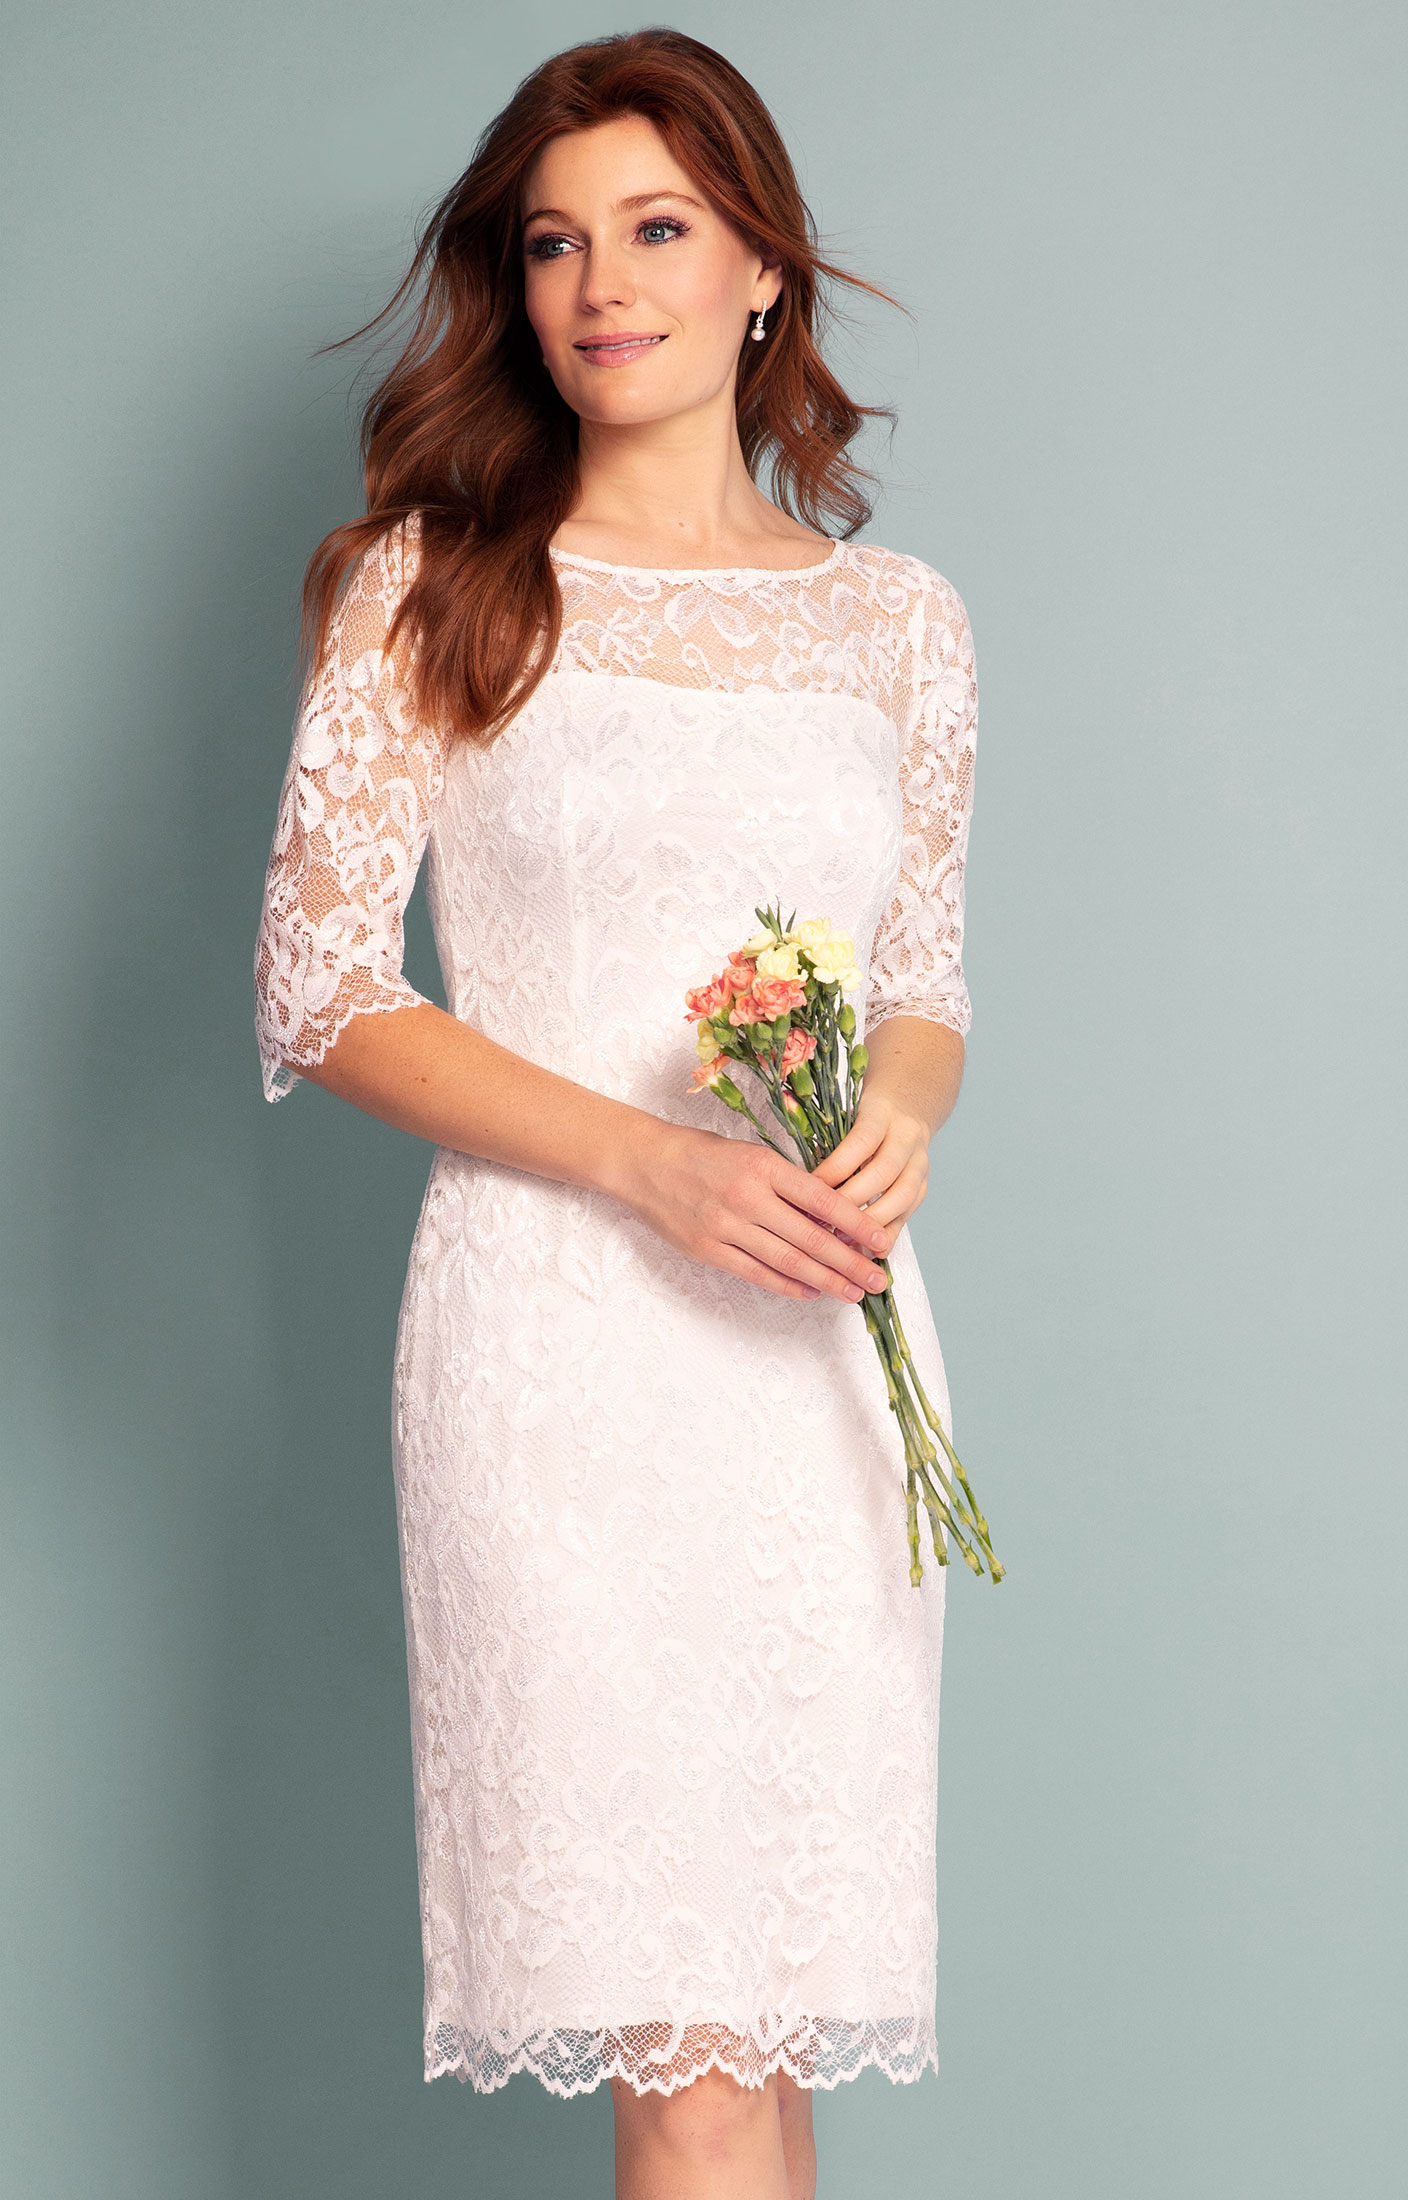 Lila Wedding Dress Short Ivory - Wedding Dresses, Evening Wear and